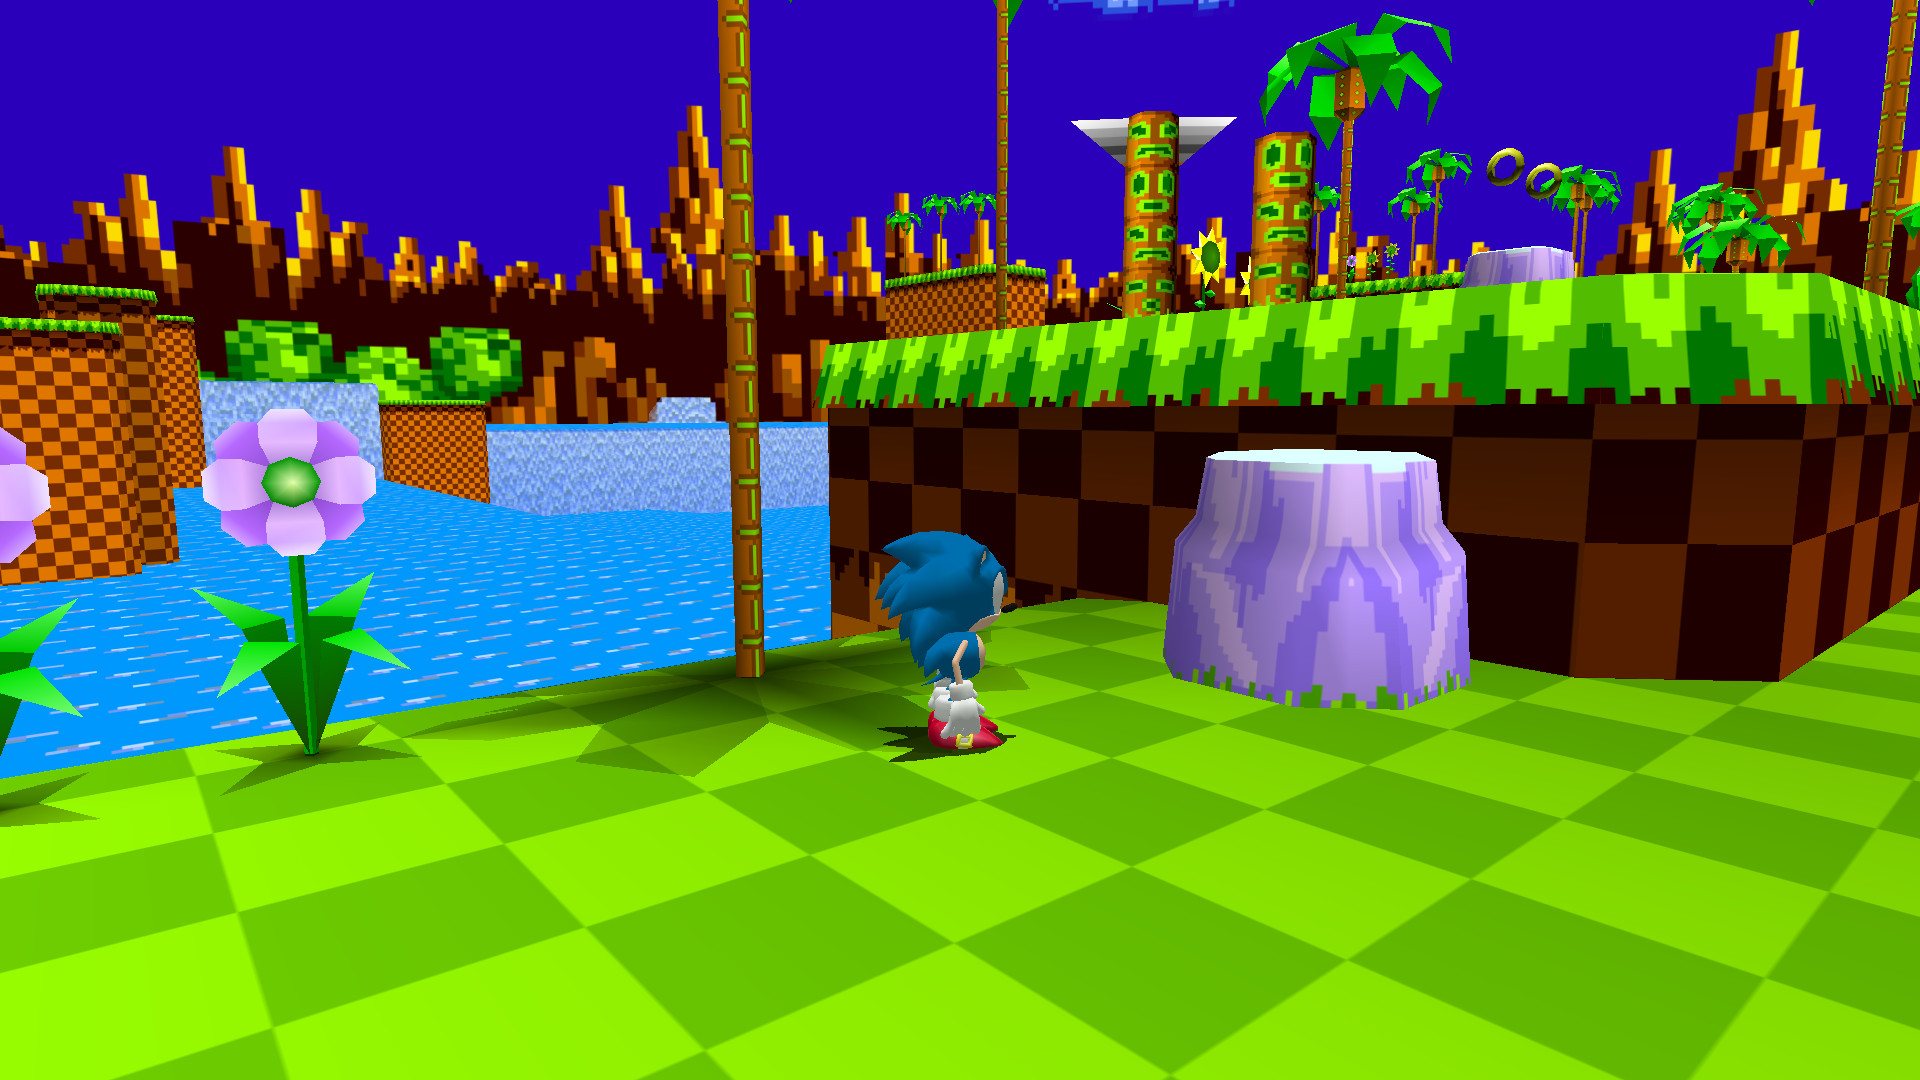 Sega Genesis / 32X - Sonic the Hedgehog - Green Hill Zone - The Spriters  Resource